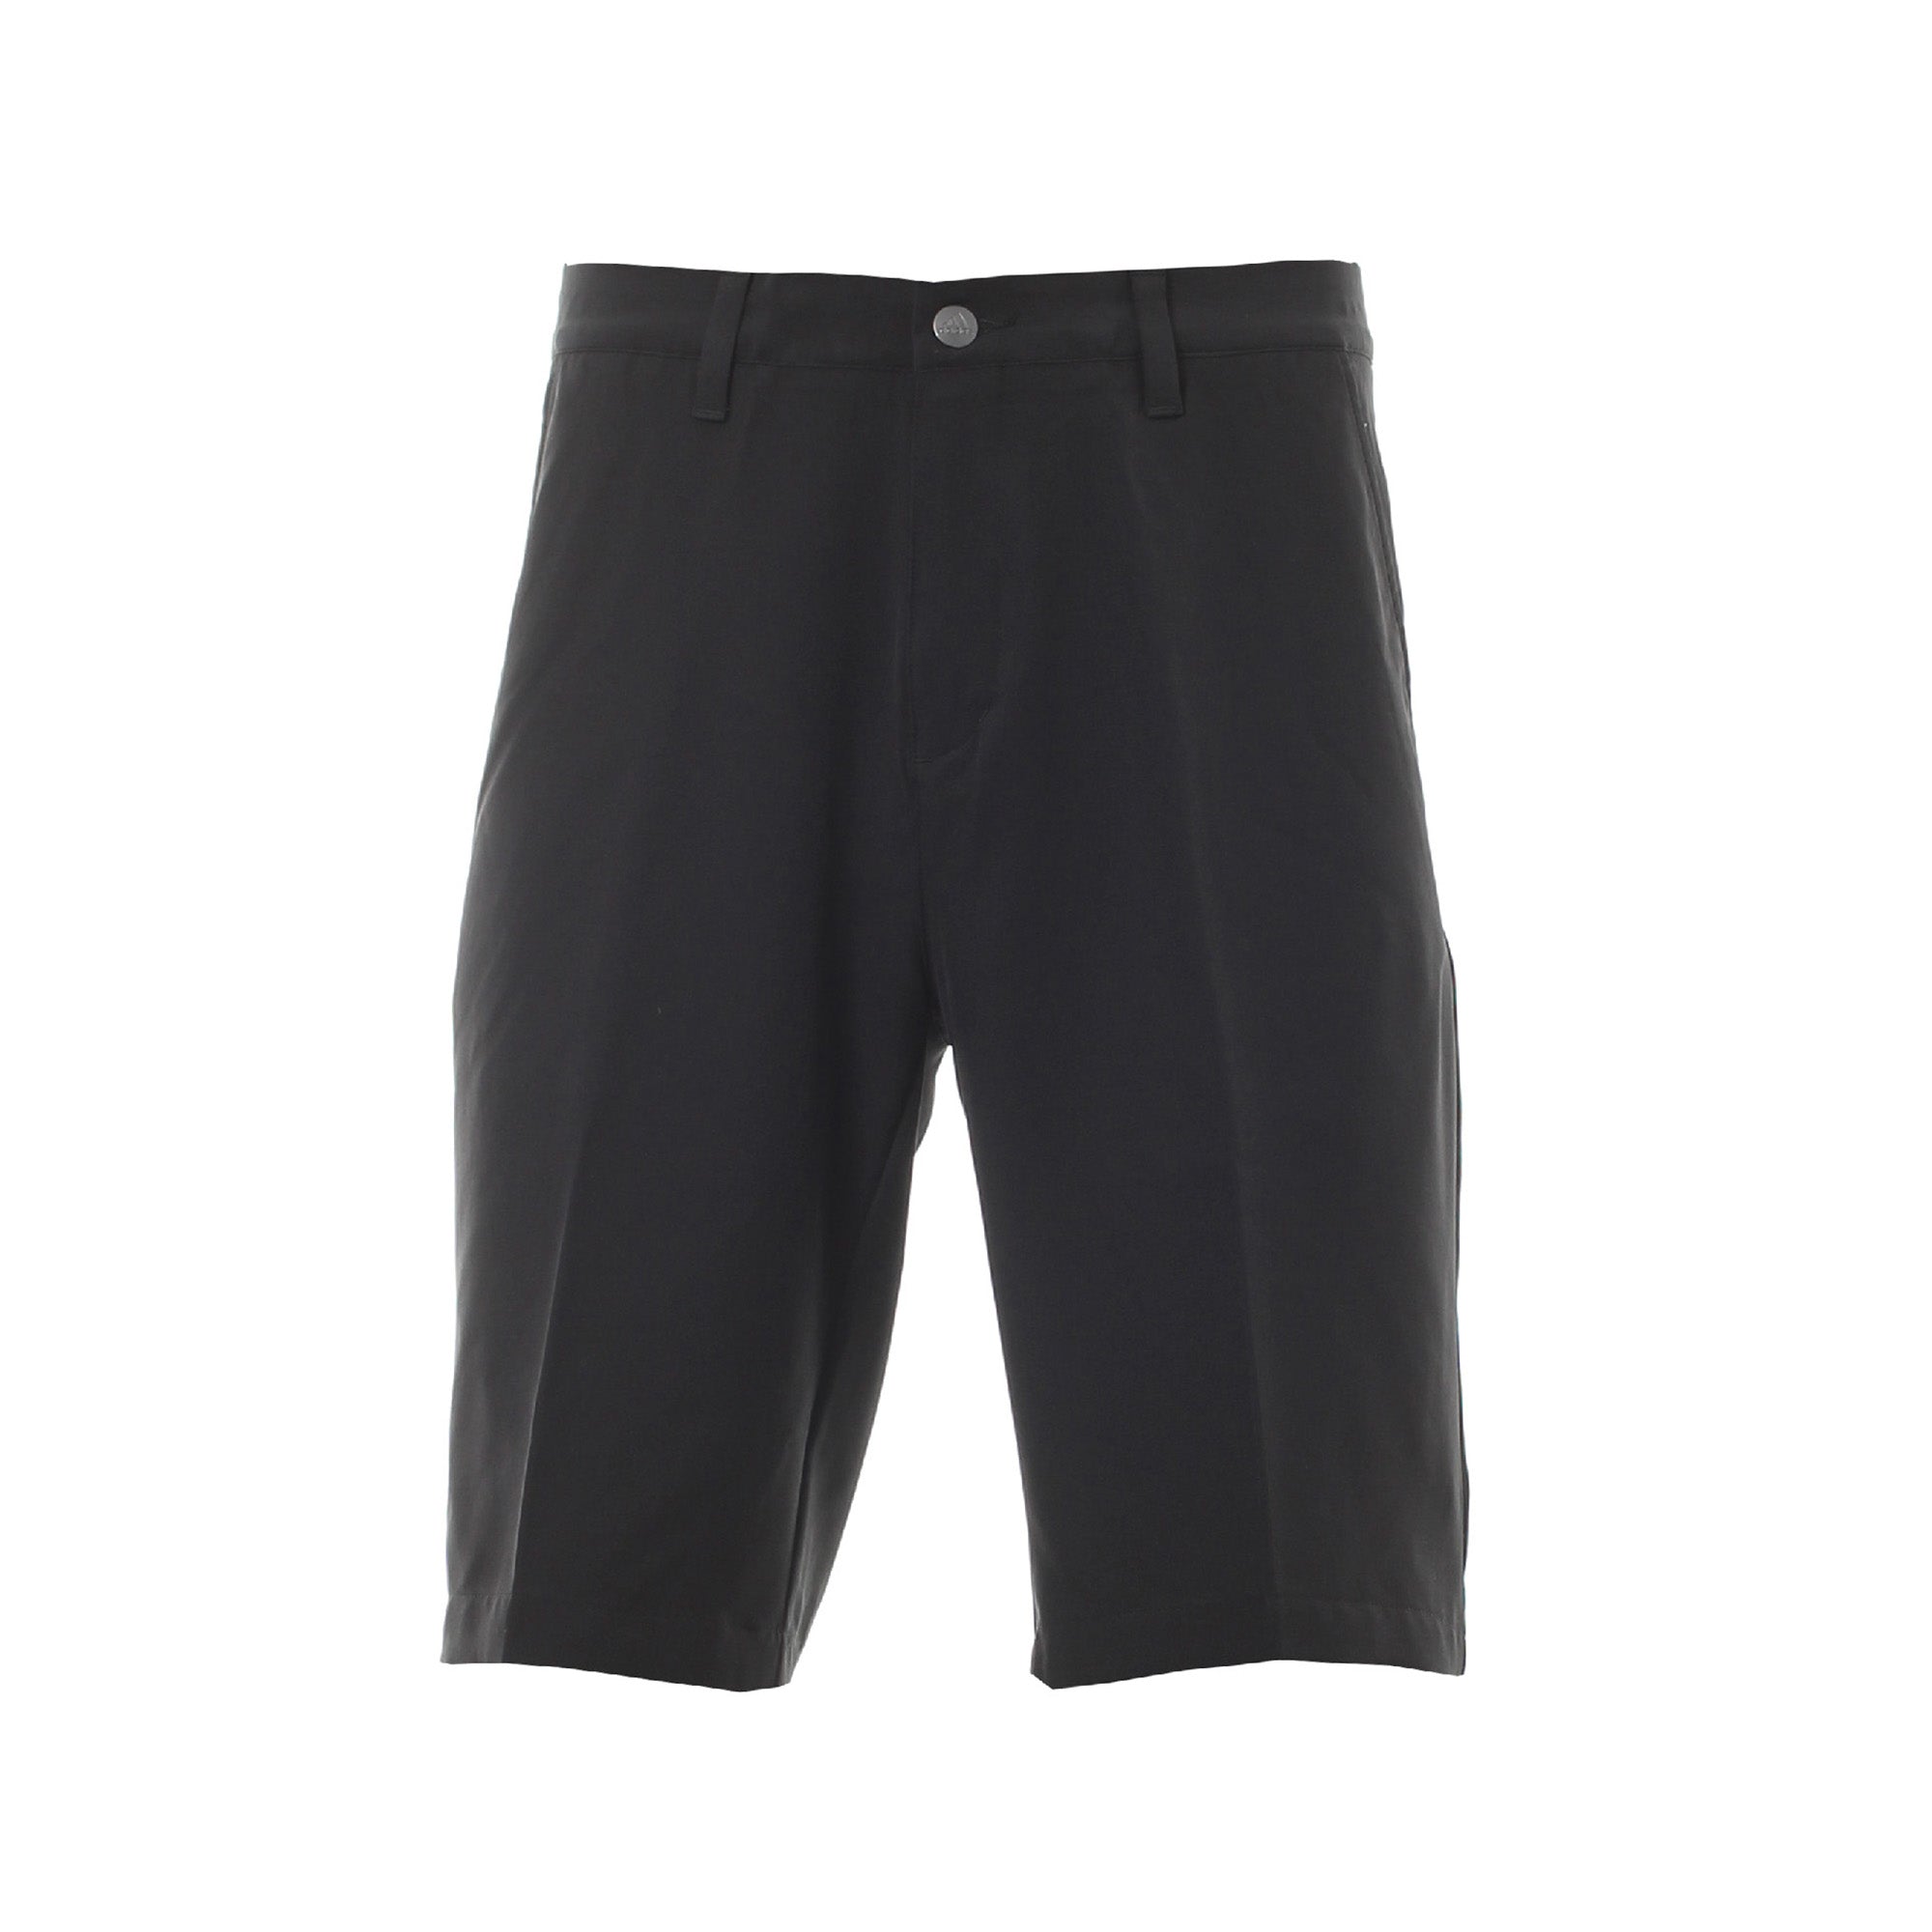 adidas ultimate 365 shorts black